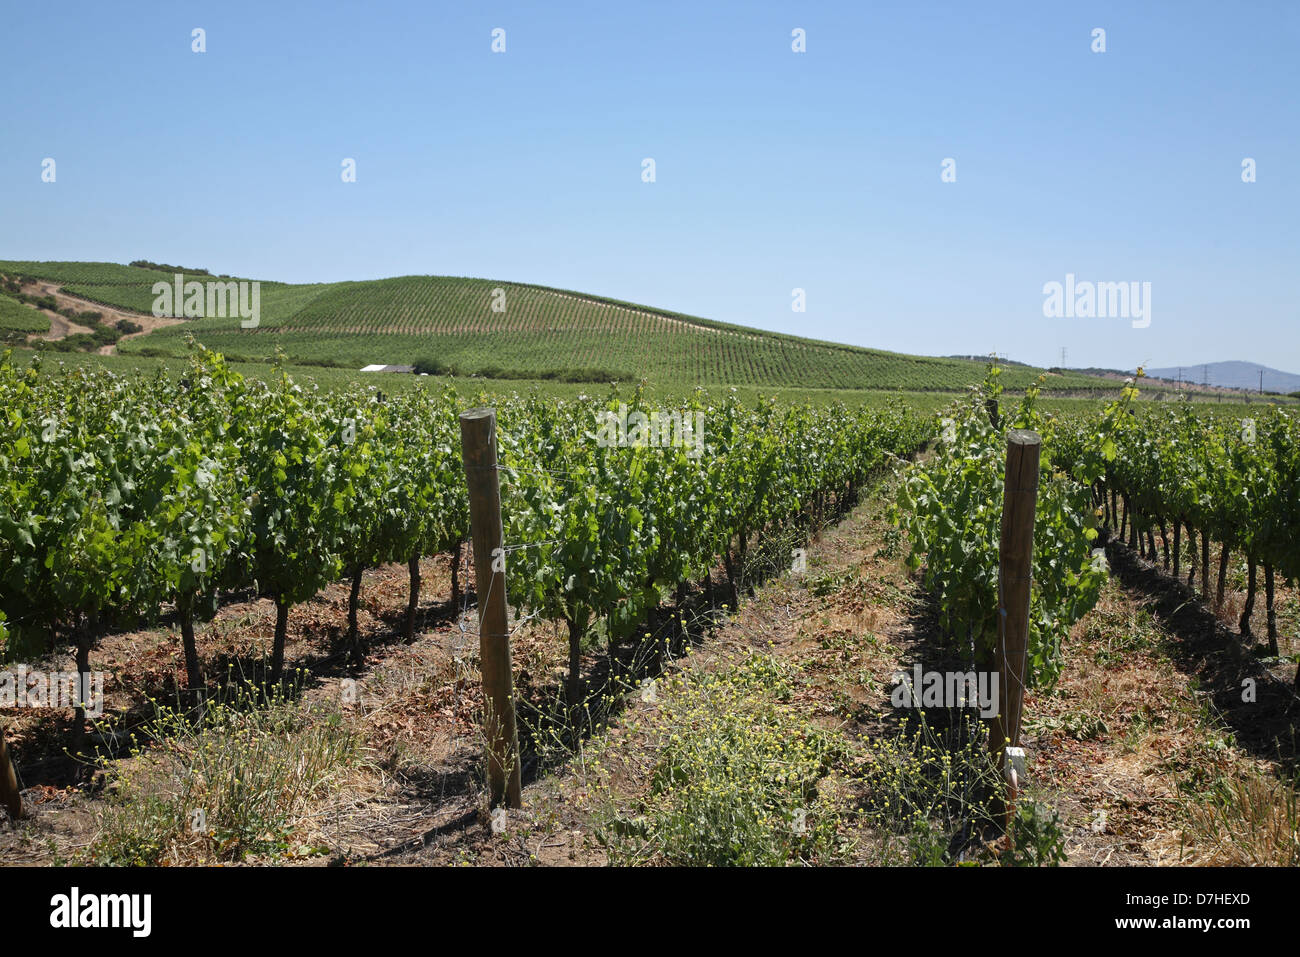 Chile Camino sin berma wine growing Stock Photo